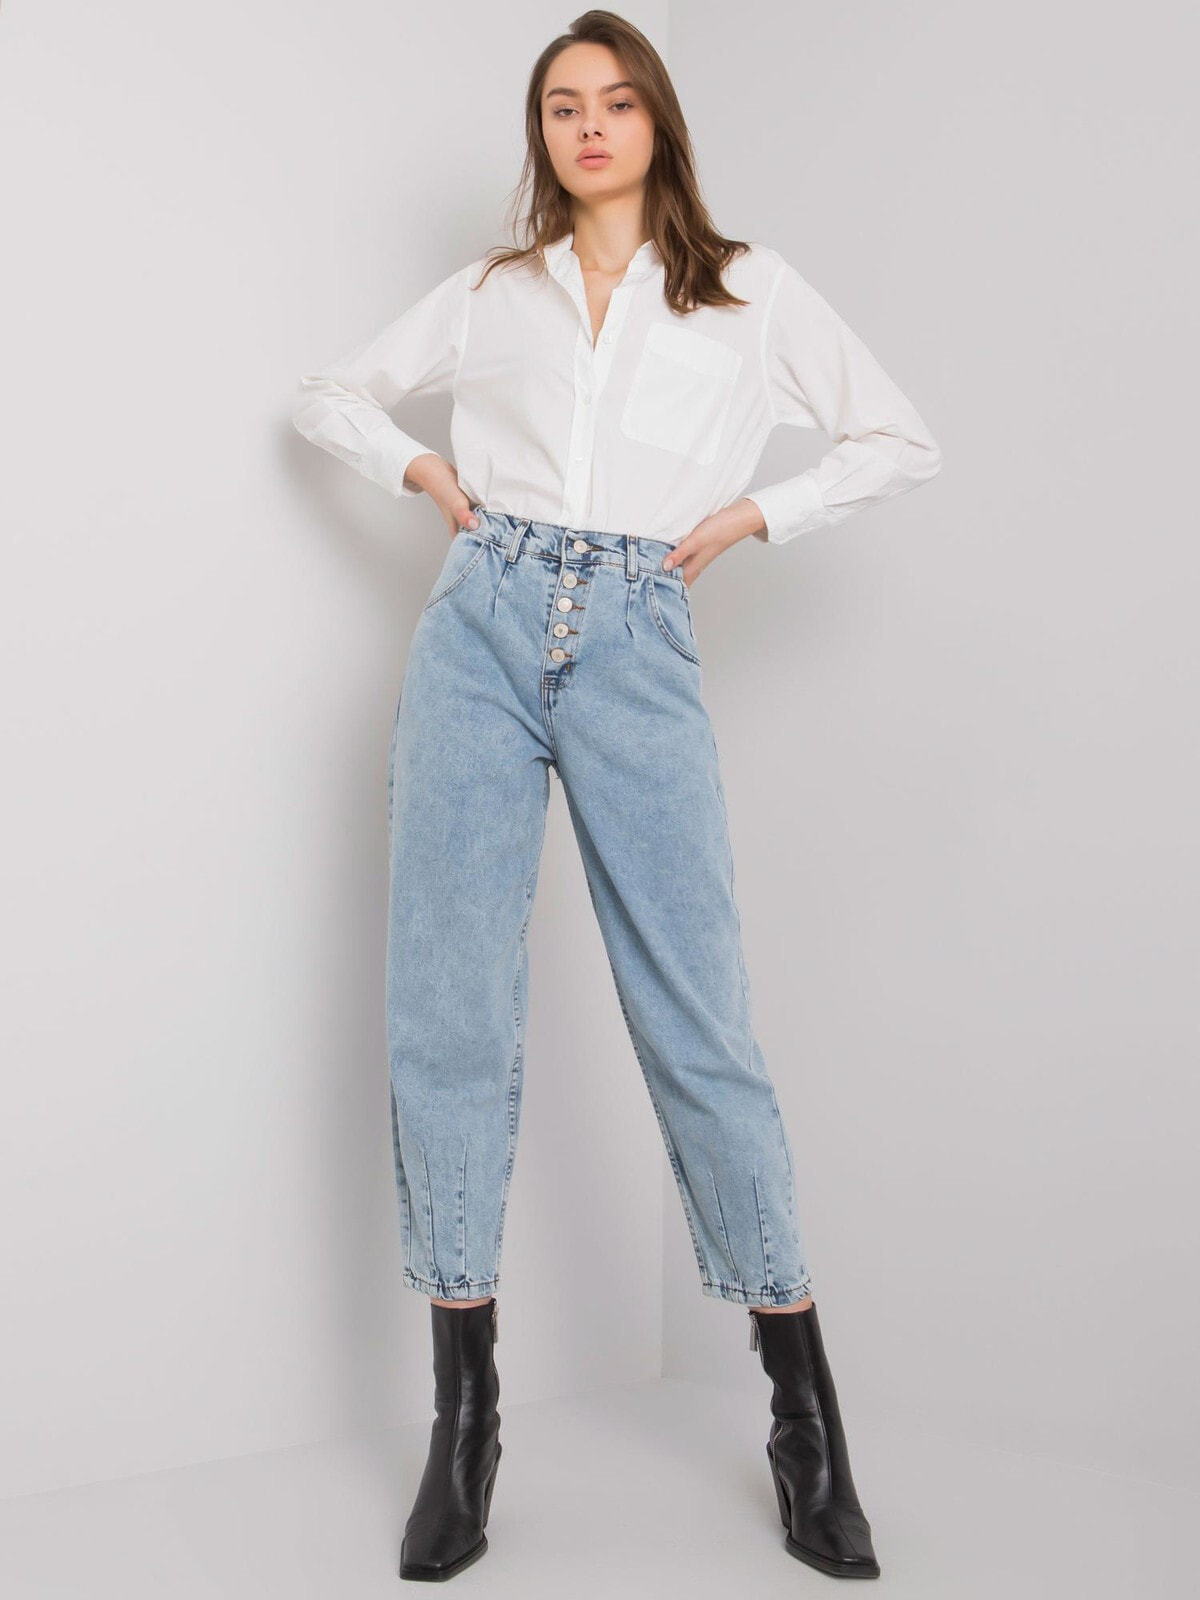 Женские синие джинсы Factory Price Spodnie jeans-MR-SP-5157.27-niebieski